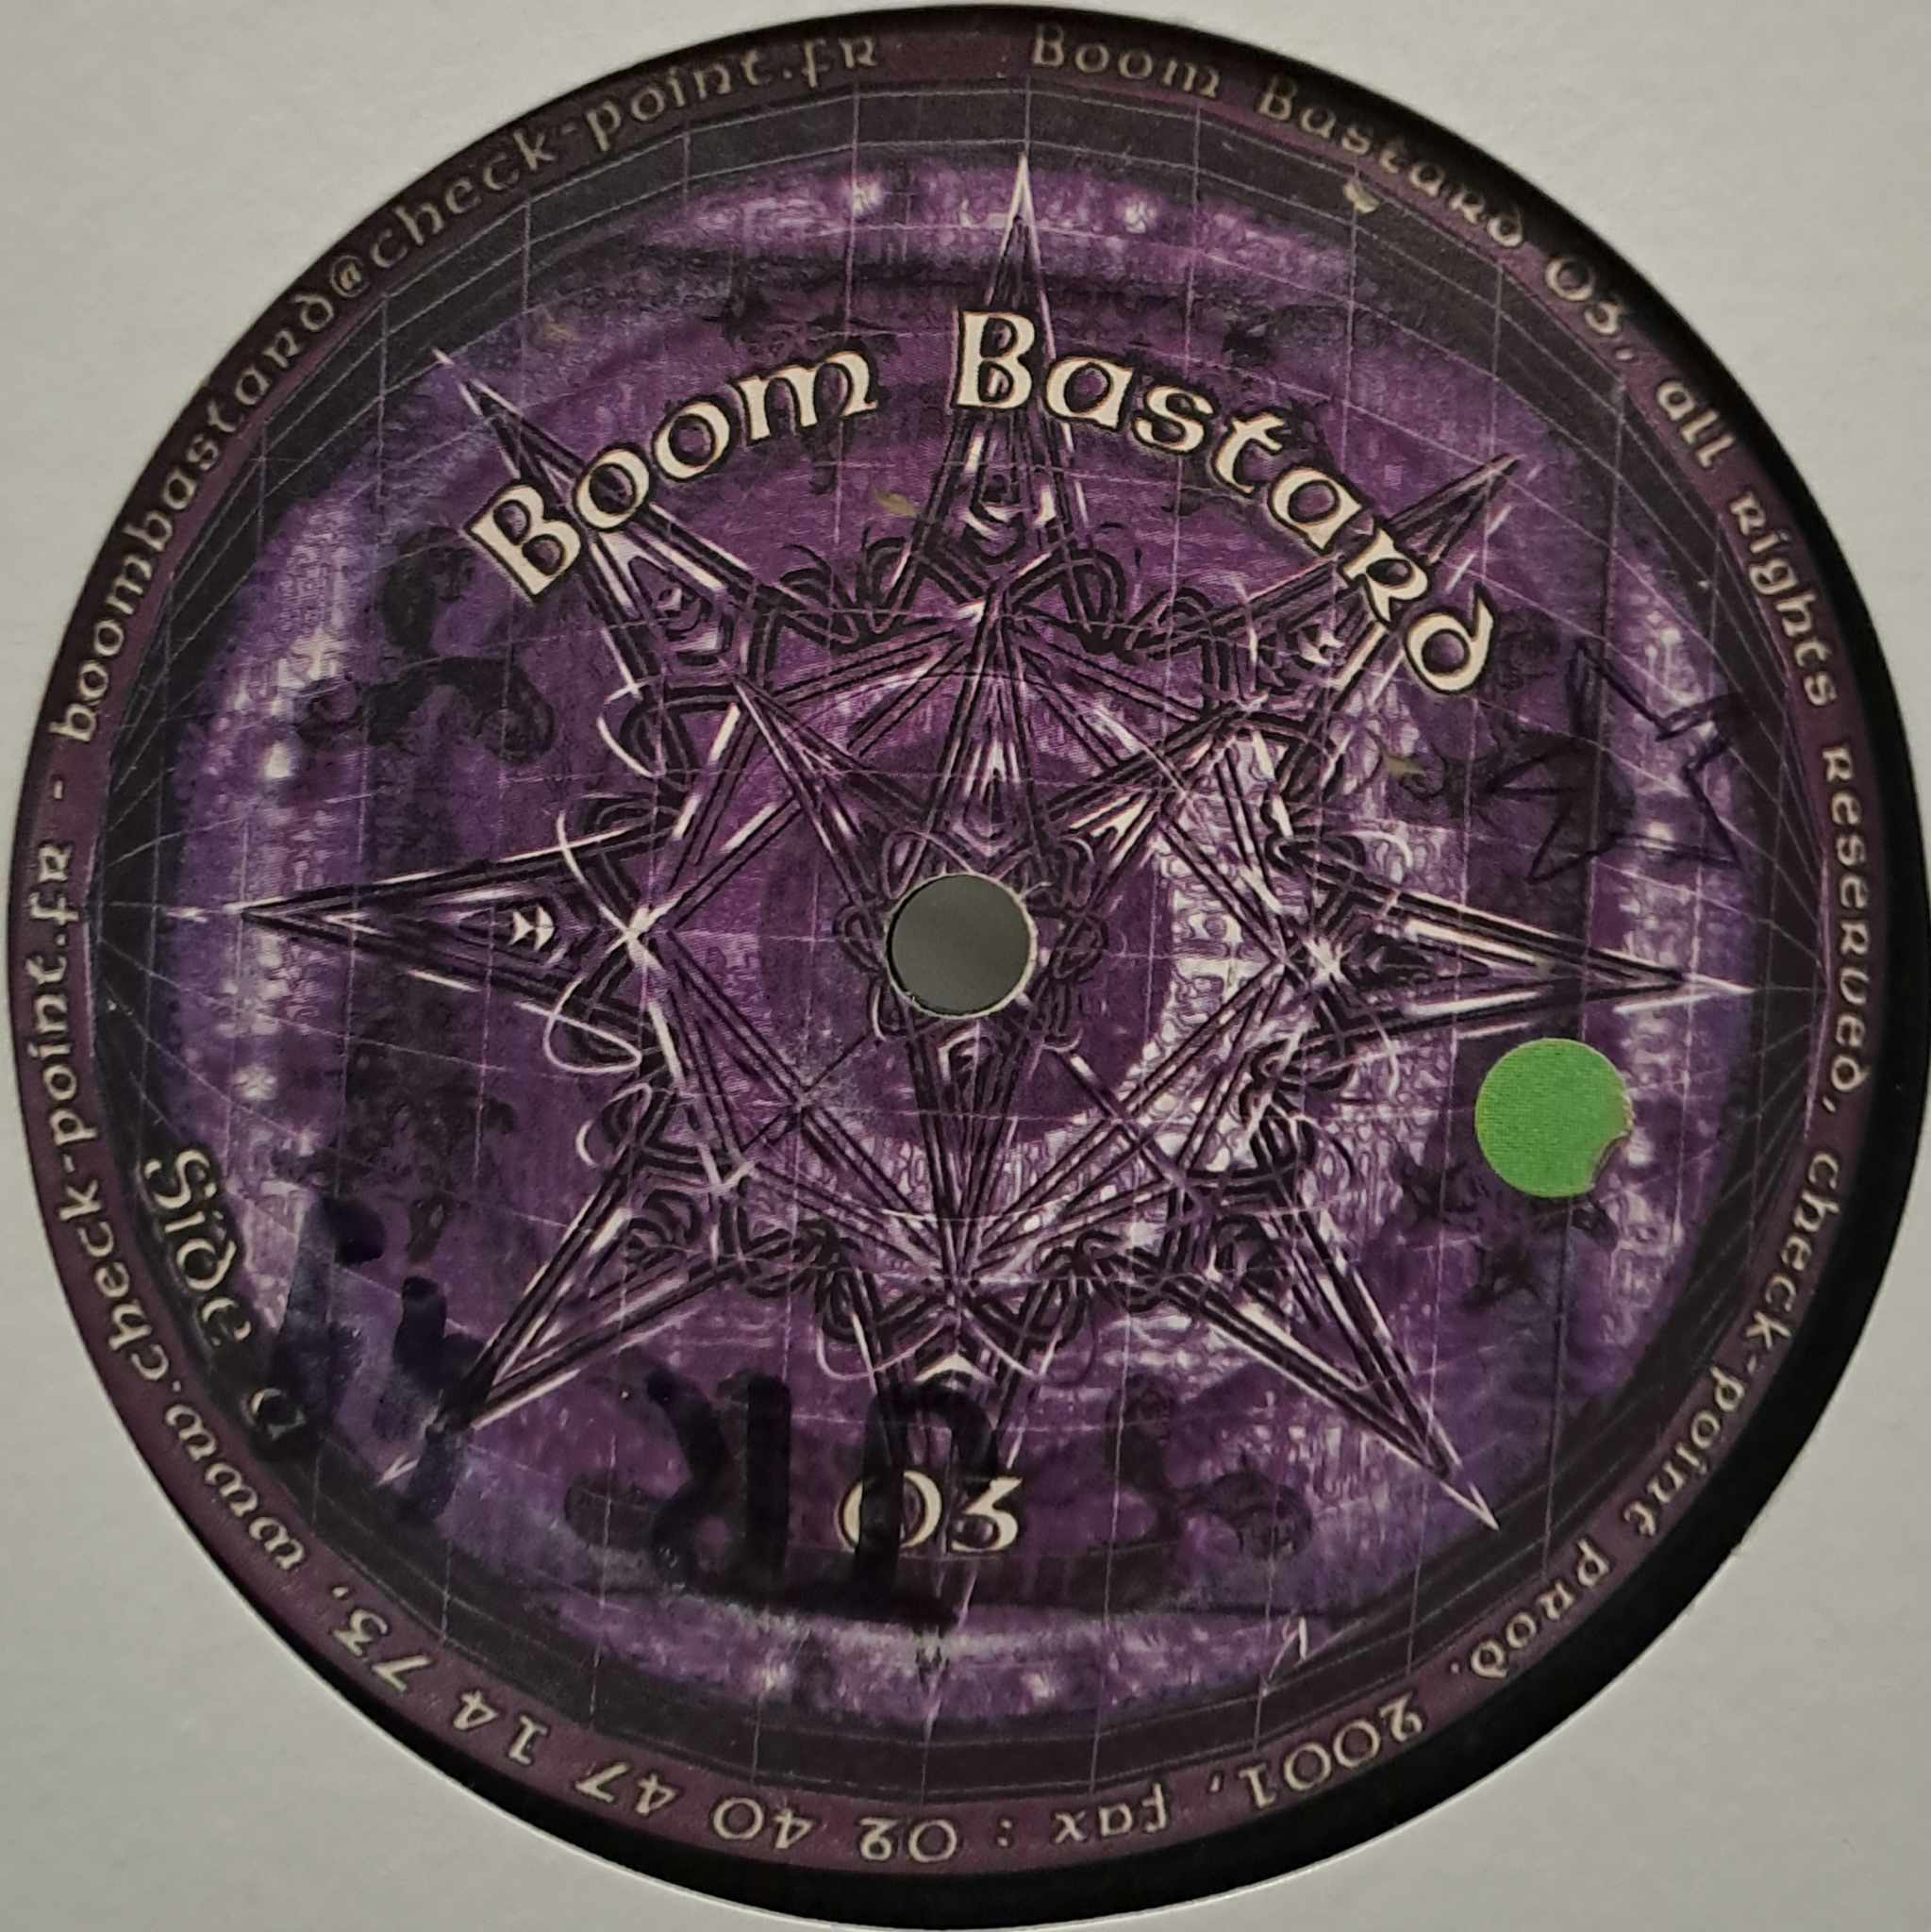 Boom Bastard 03 - vinyle freetekno